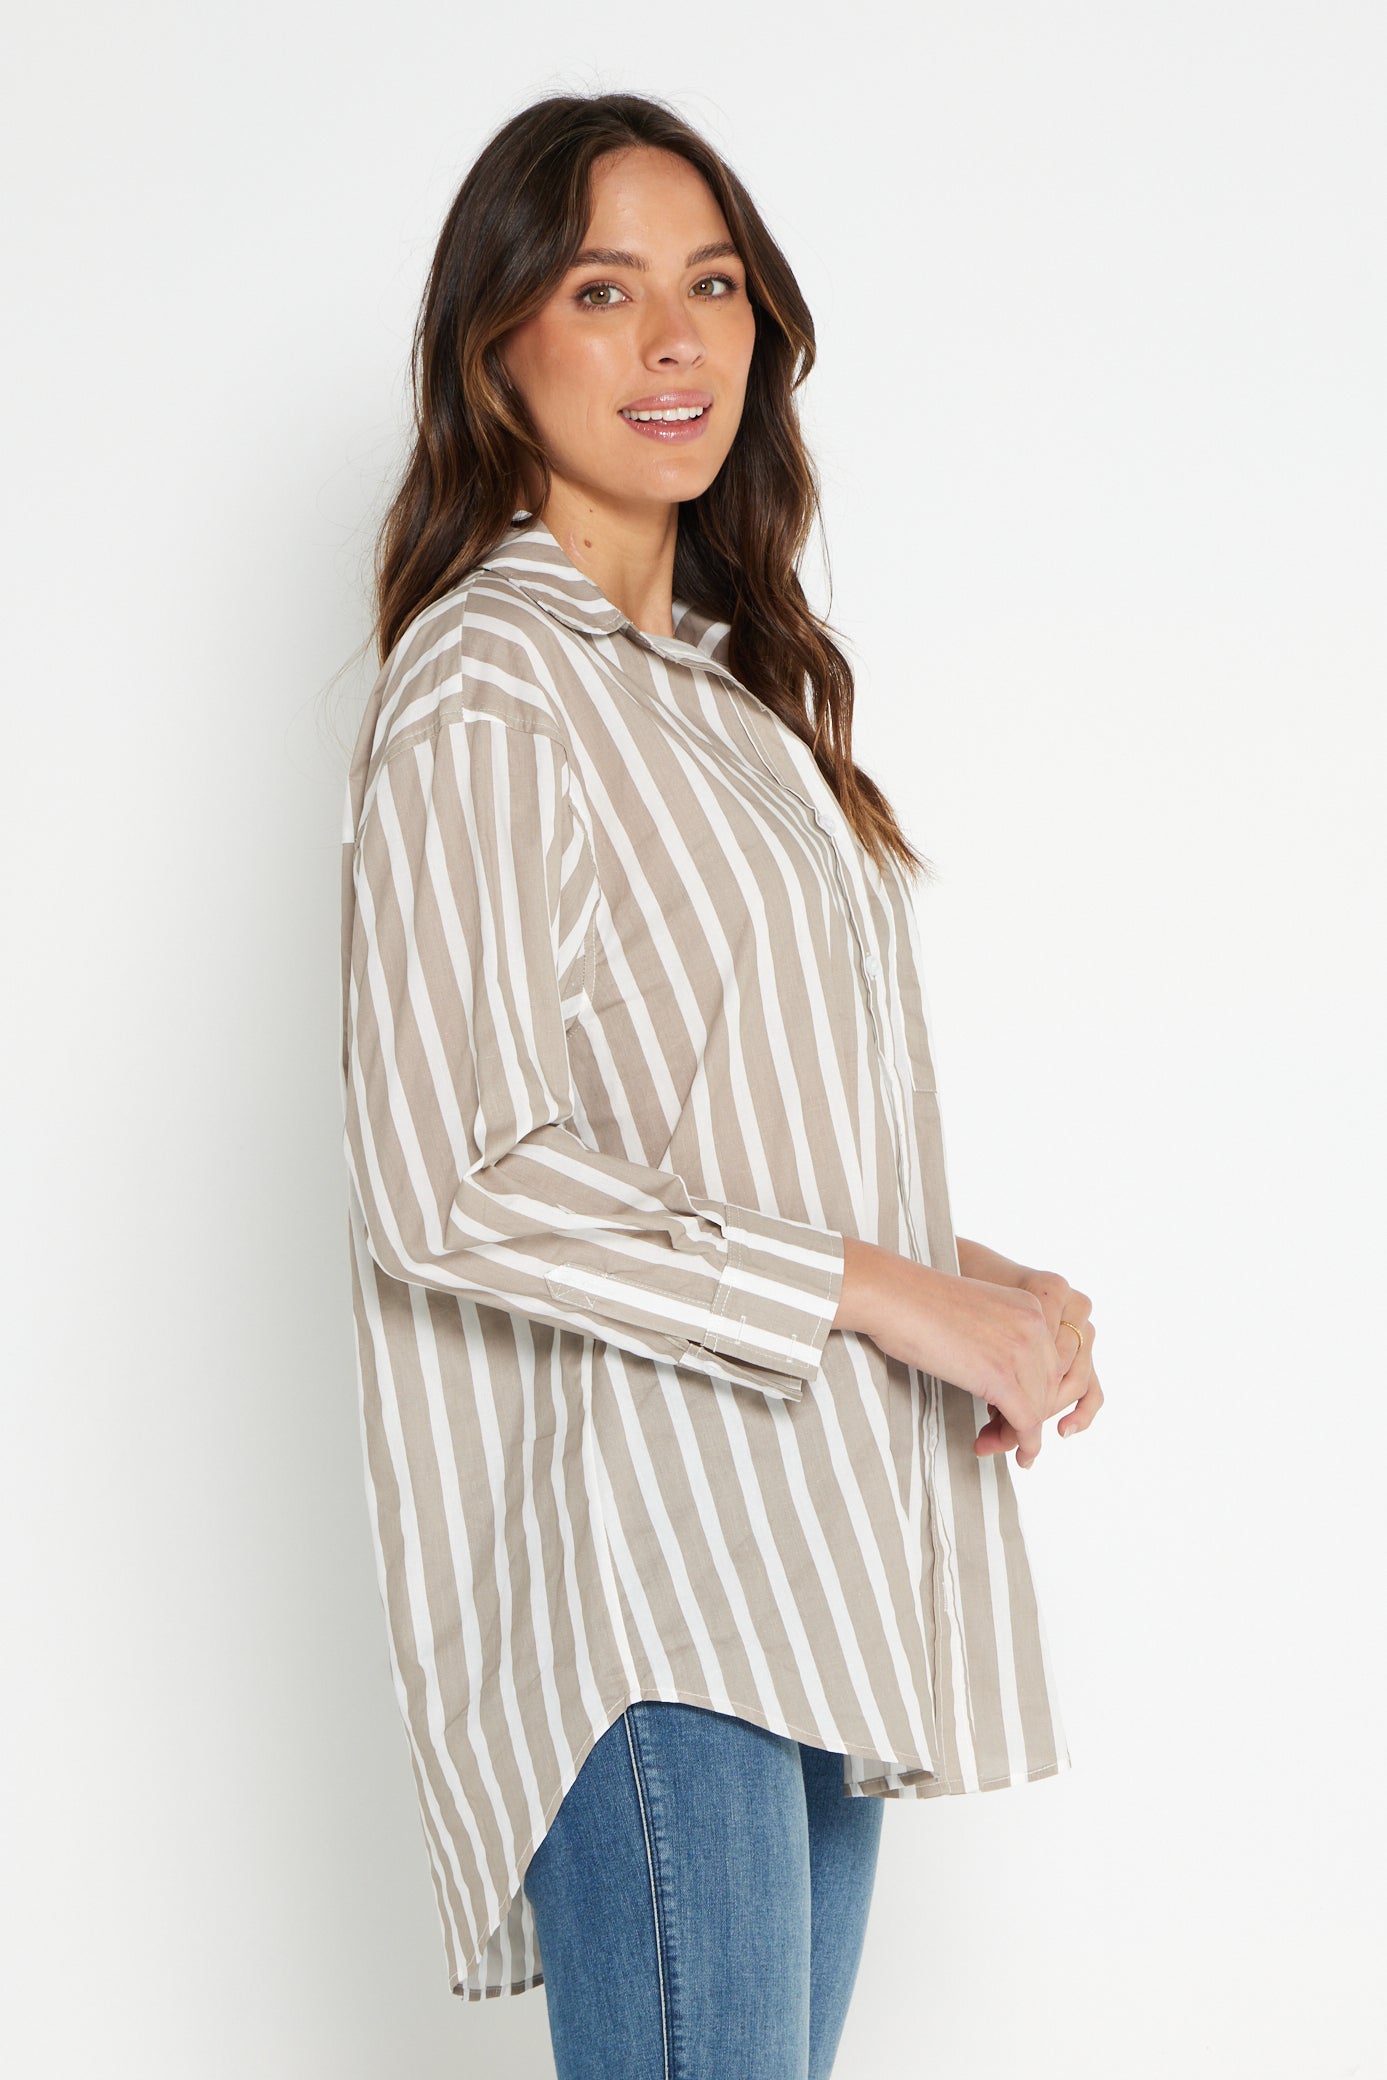 Joss Cotton Shirt - Taupe White Stripe